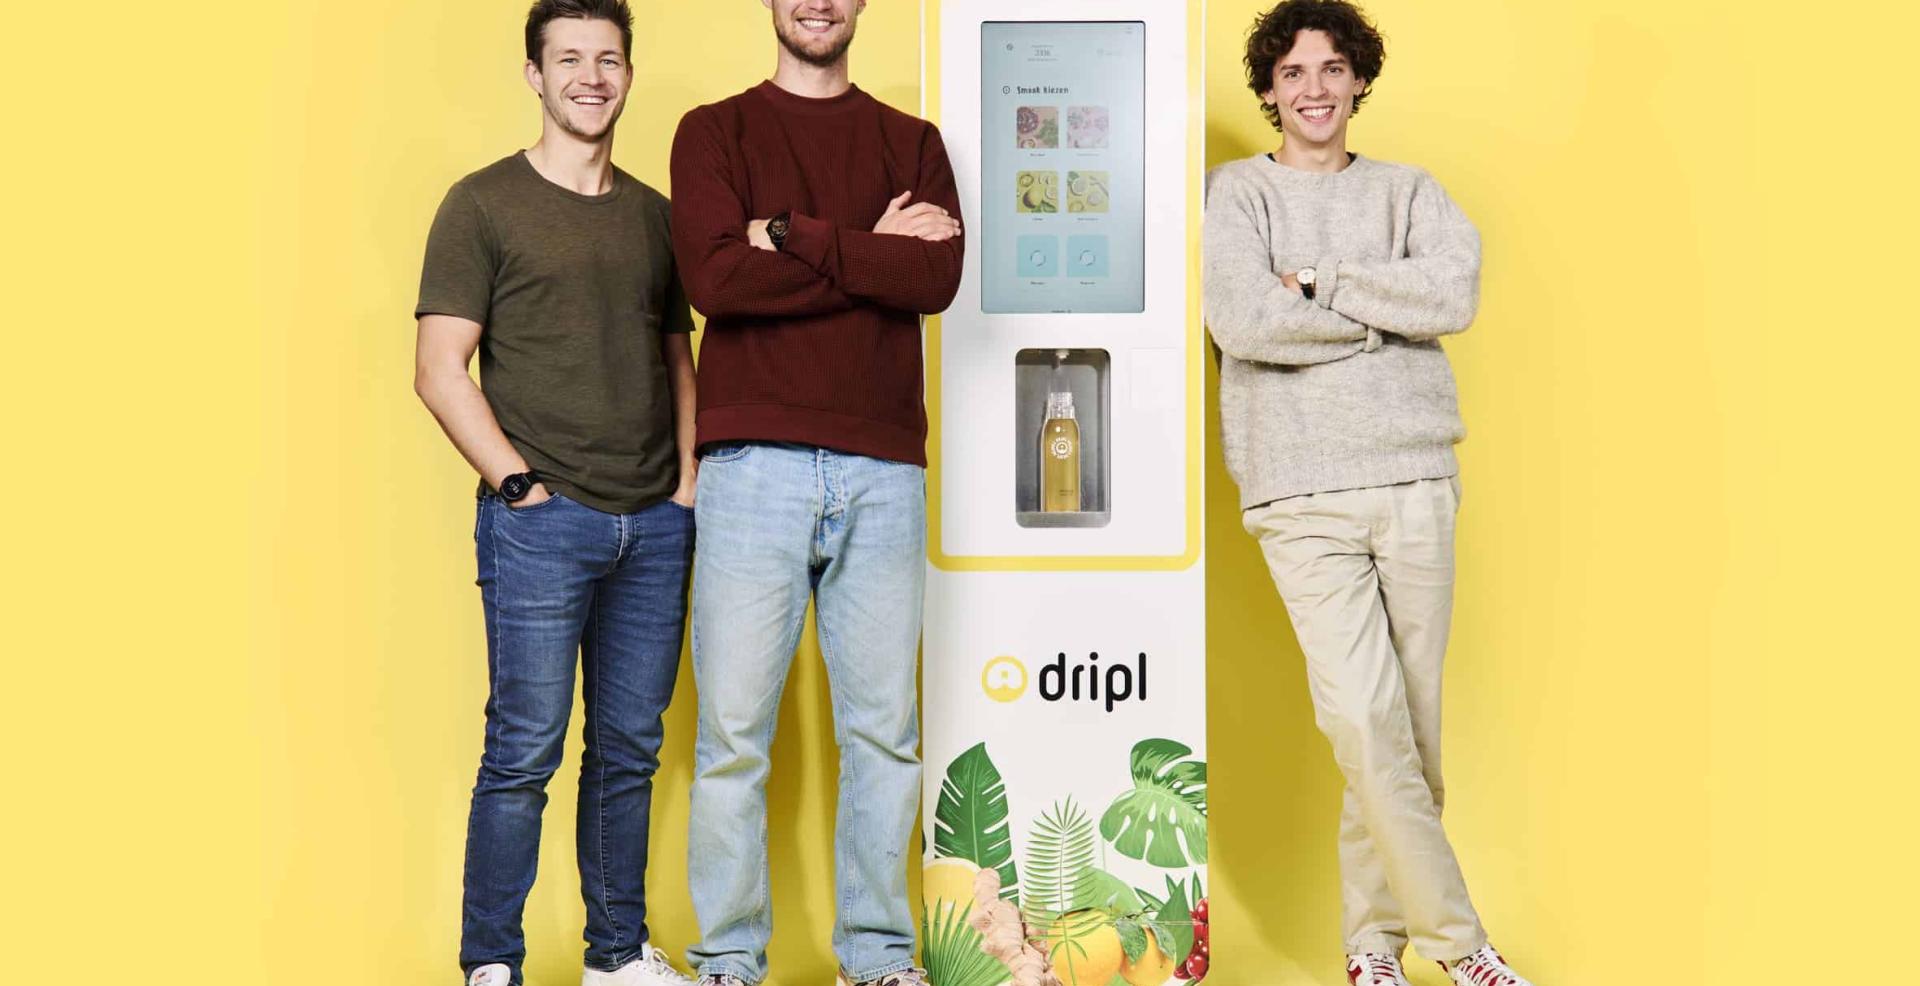 Dripl founders